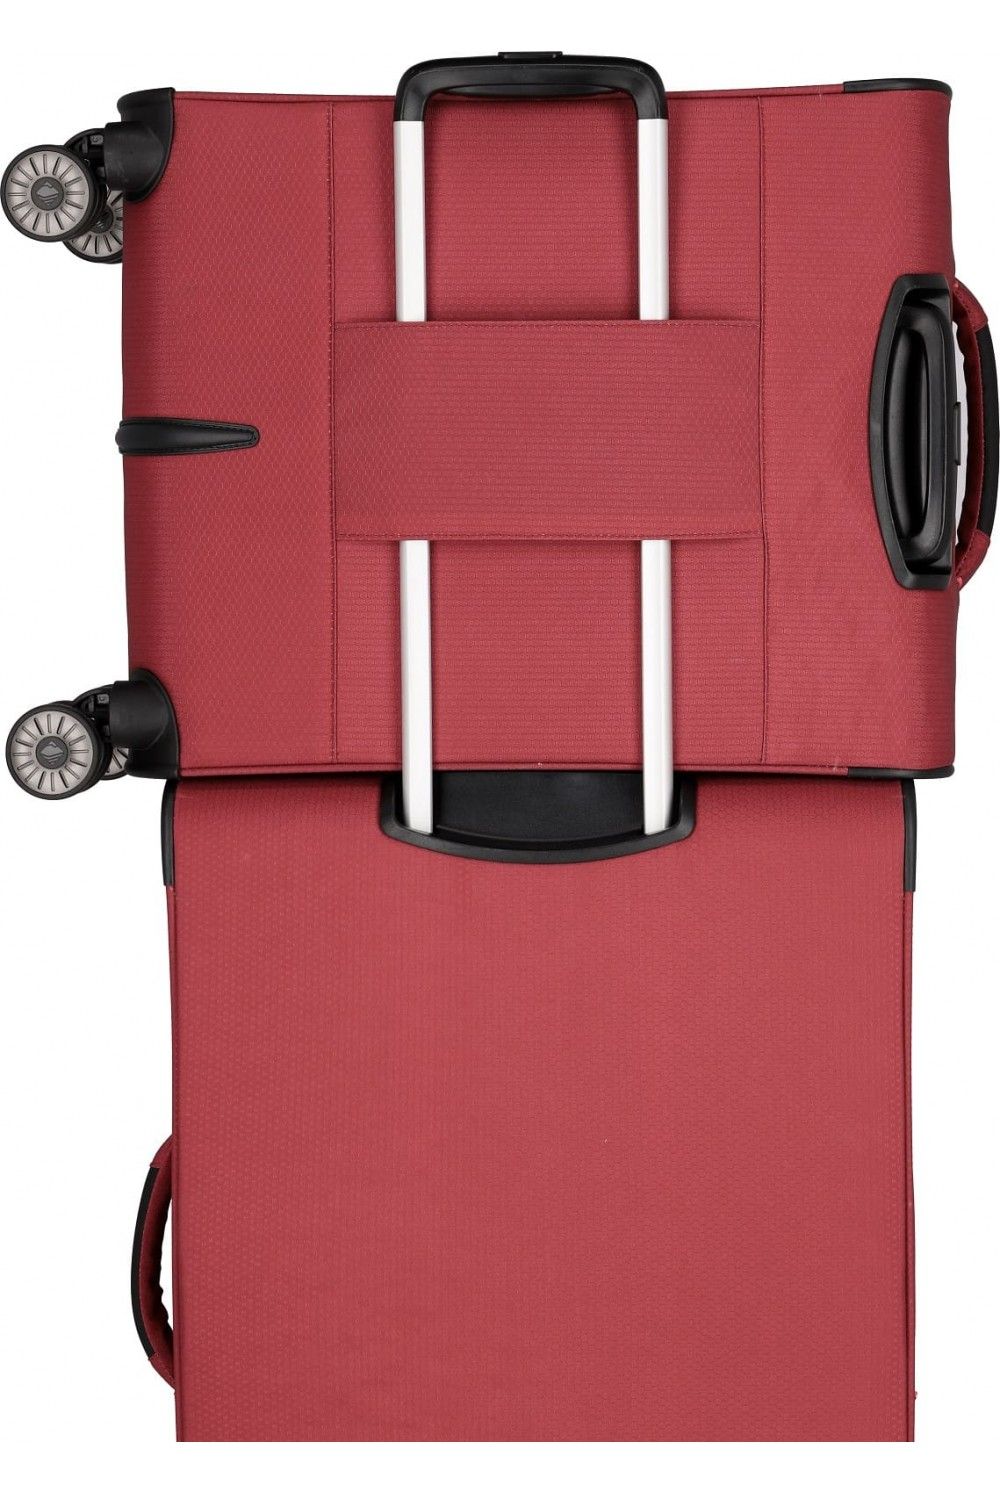 Hand luggage suitcase Travelite Skaii 55cm 4 wheels